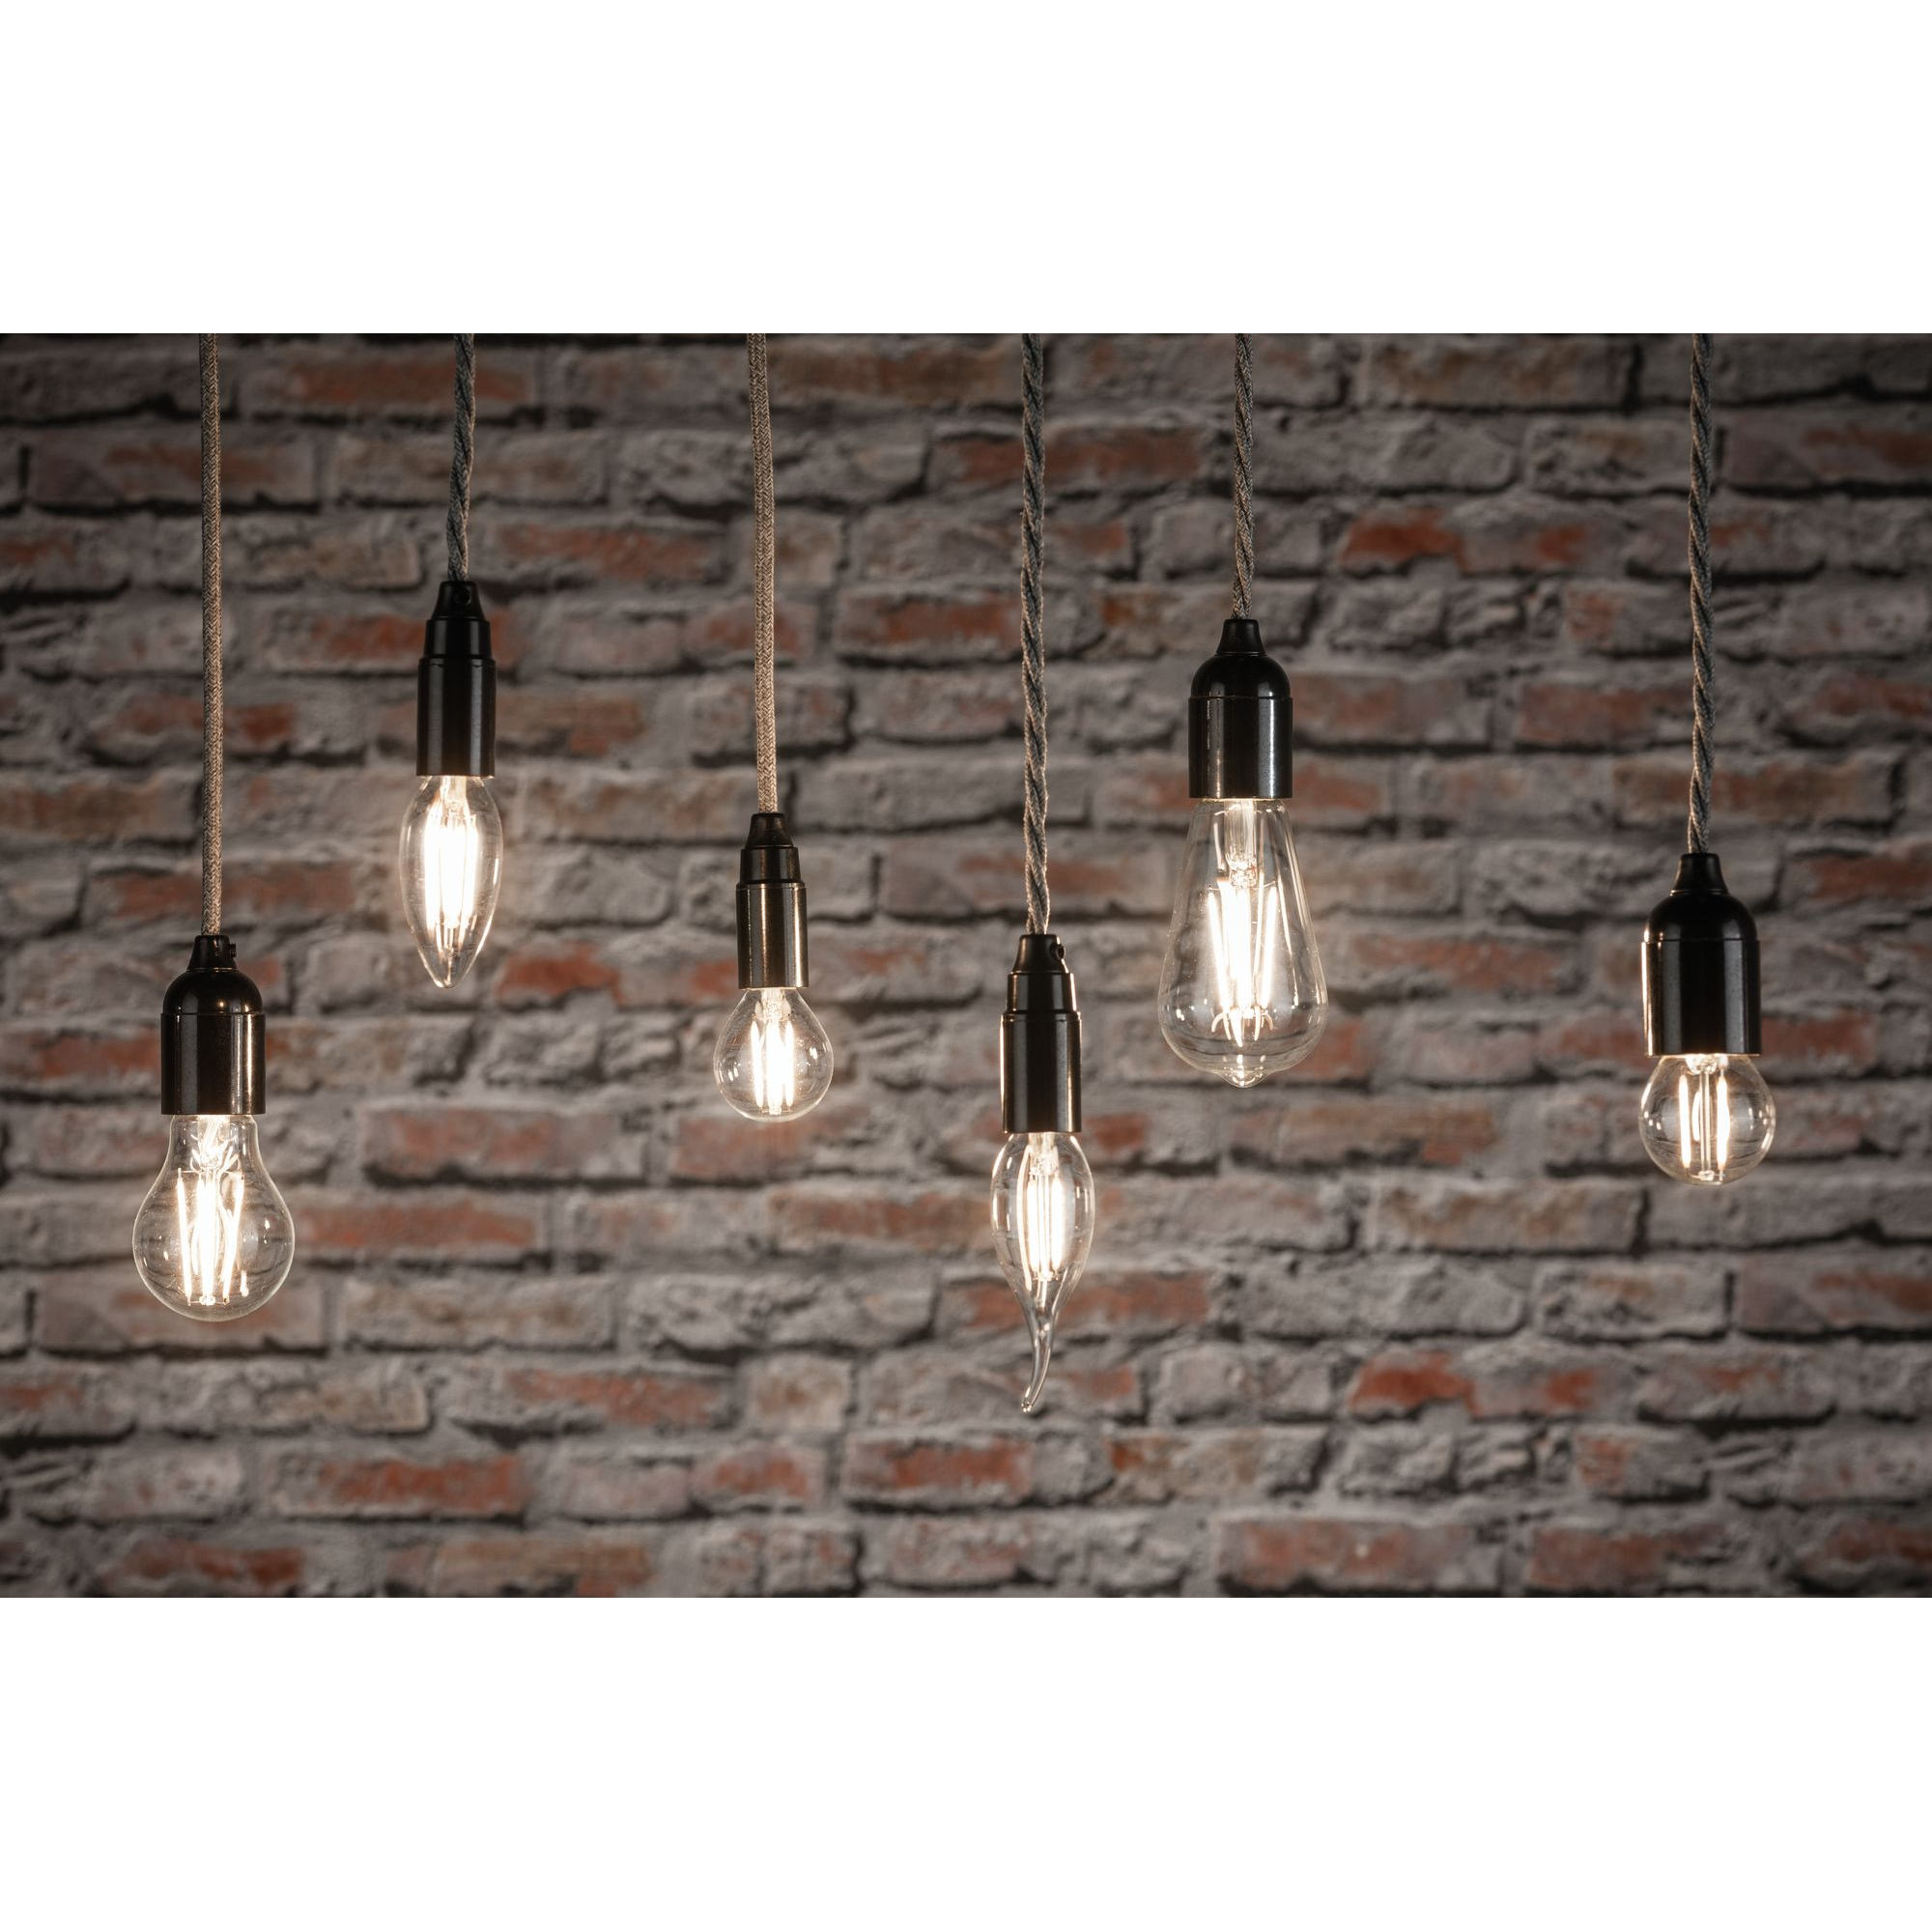 LED-Lampe E27 12,5W (100W) 1521 lm warmweiß klar + product picture